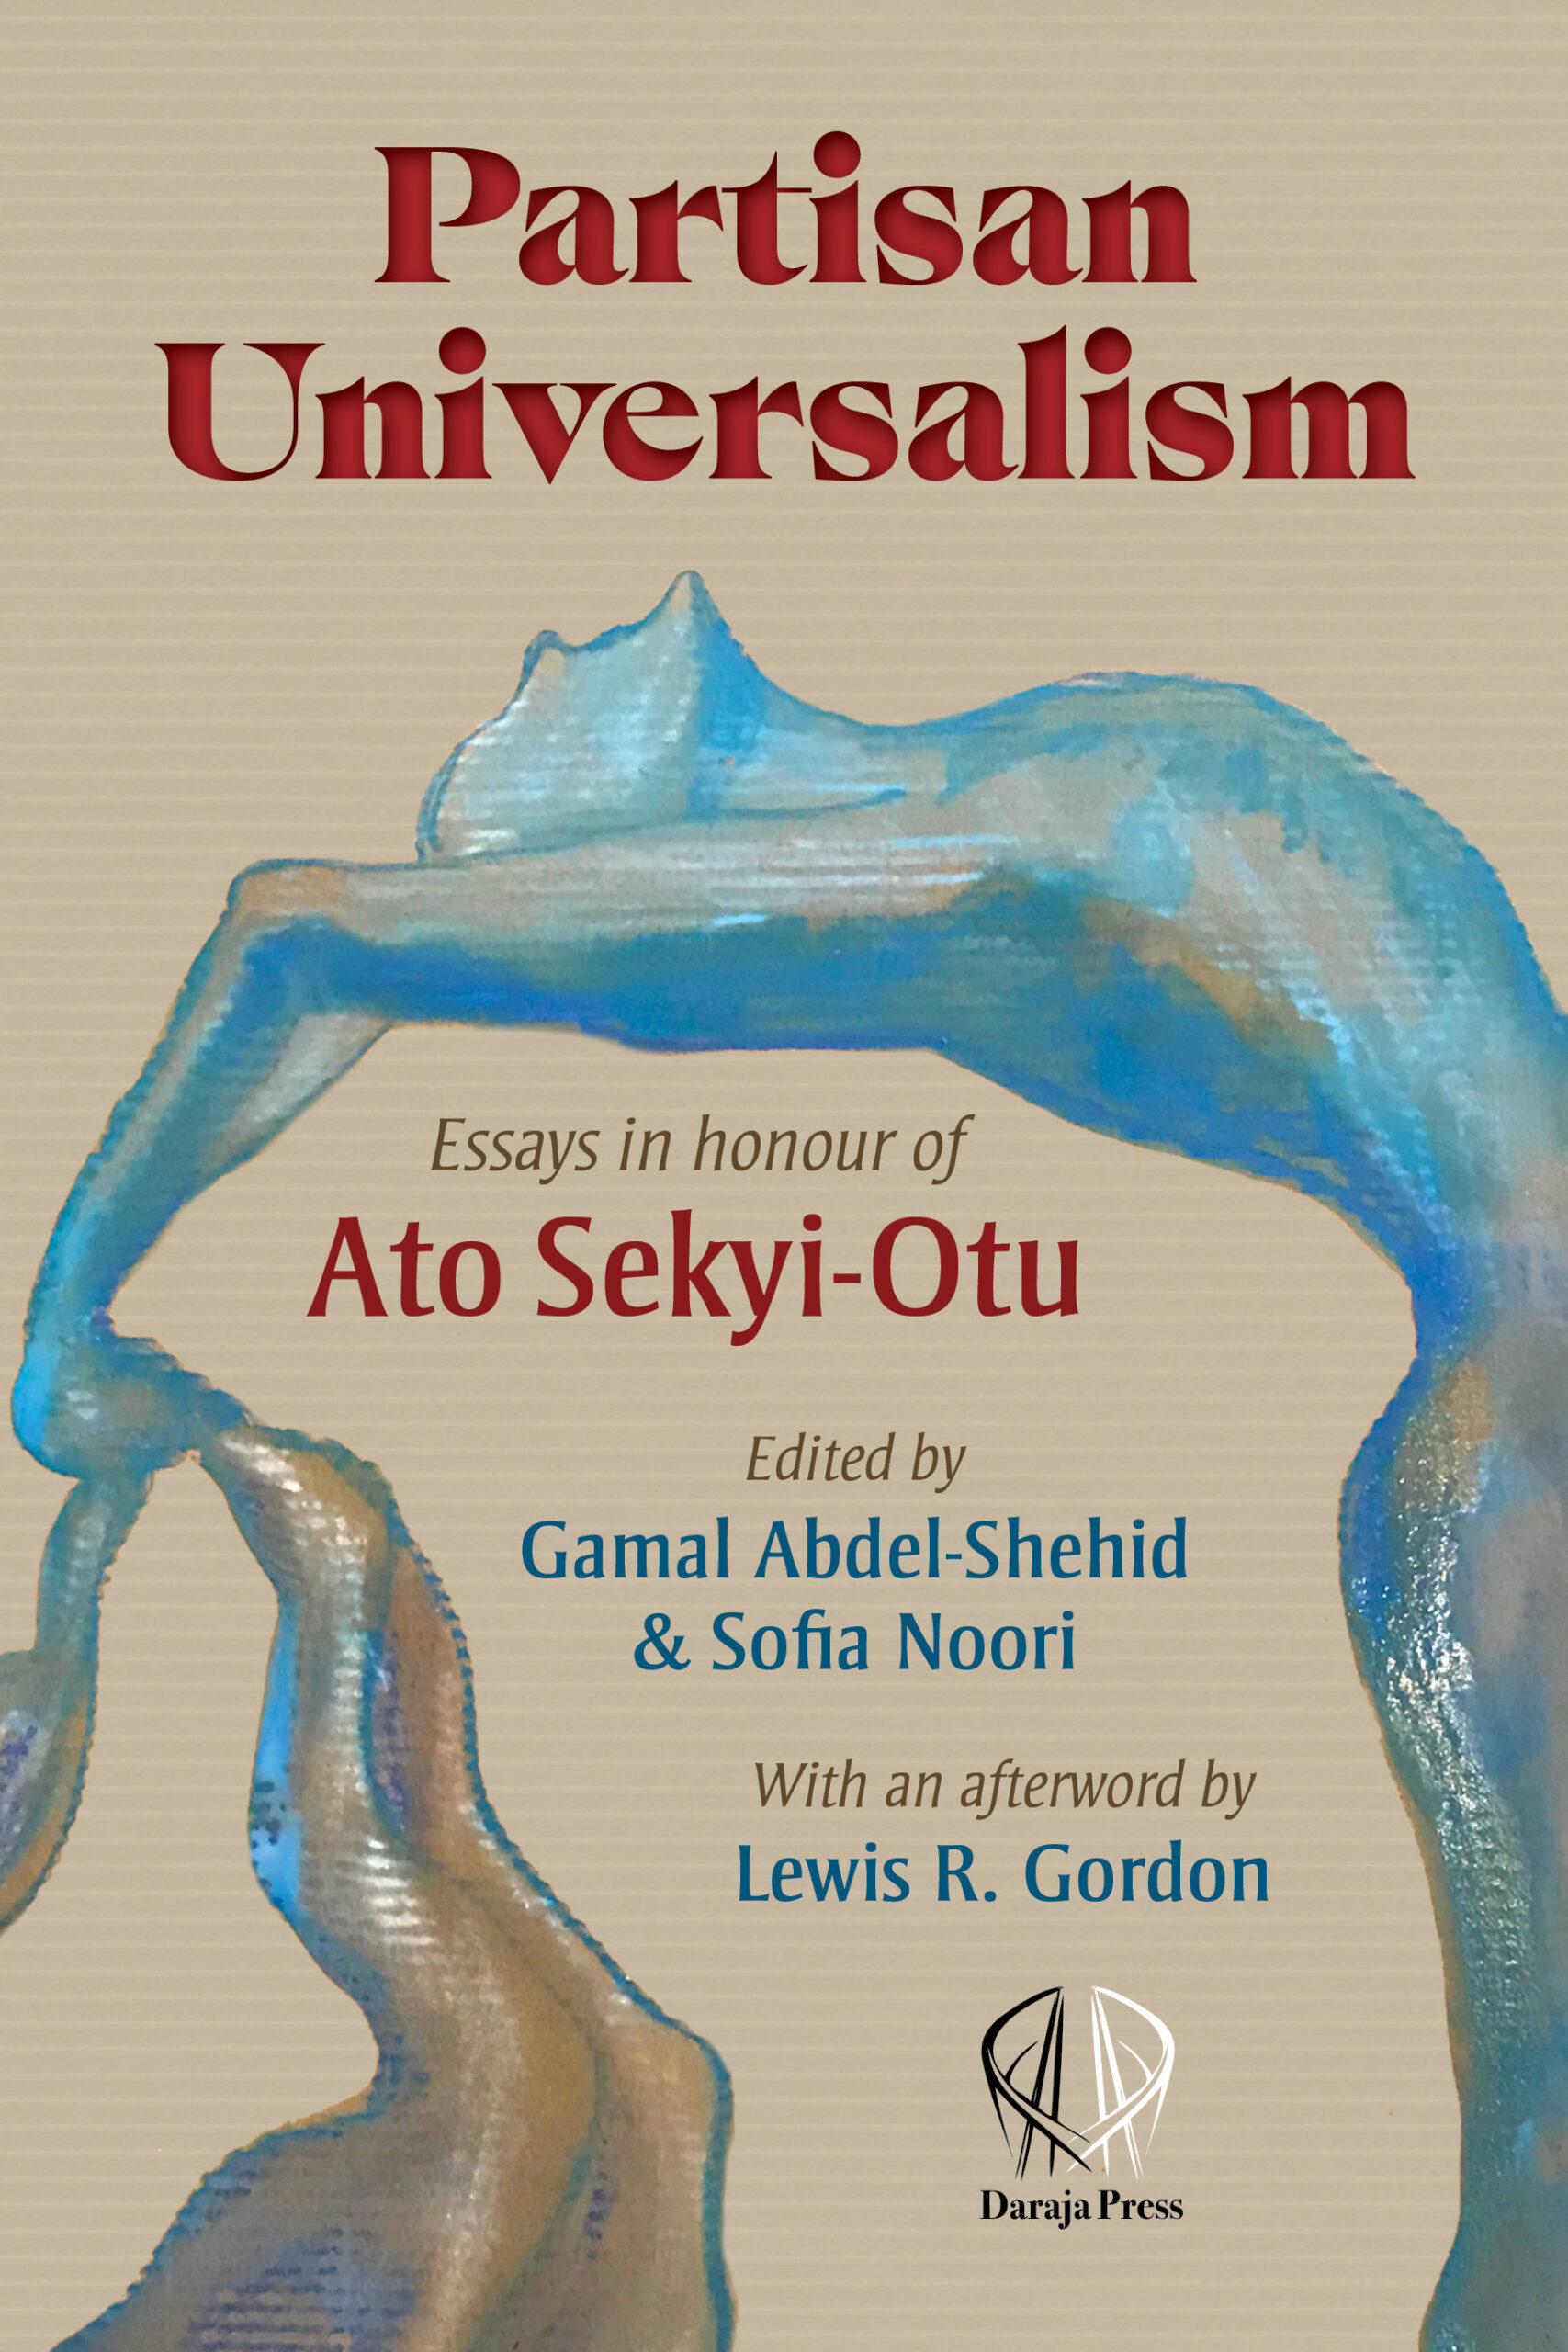 Partisan Universalism: Essays in Honour of Ato Sekyi-Otu